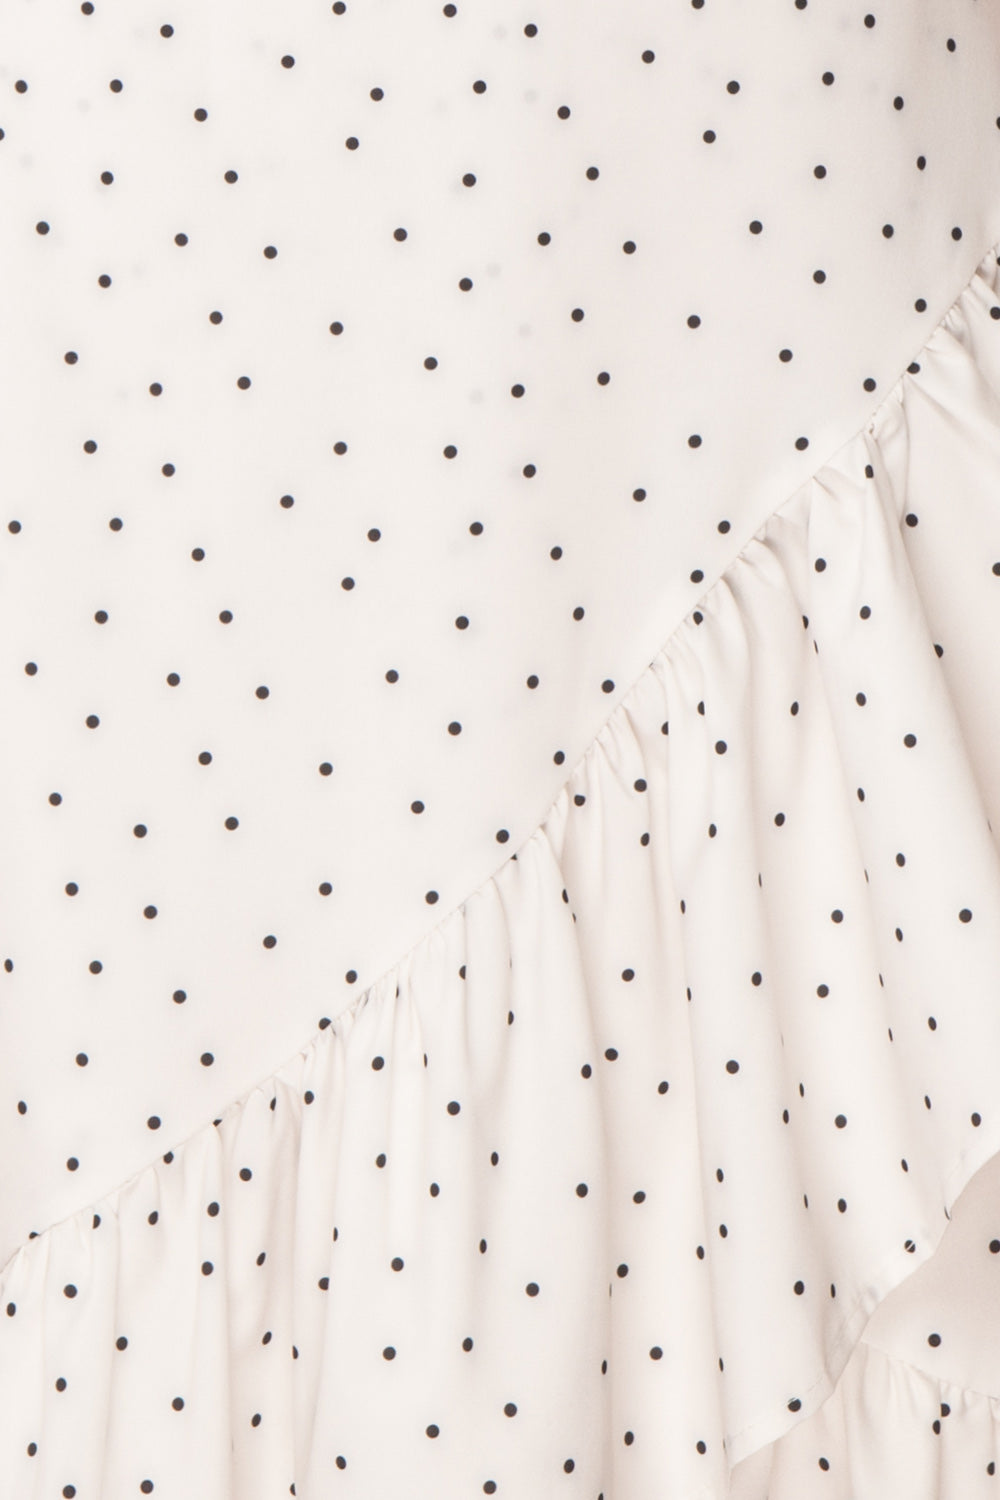 Nimfea White Polka Dot Ruffled Skirt | Jupe Midi | Boutique 1861 fabric fabric close up